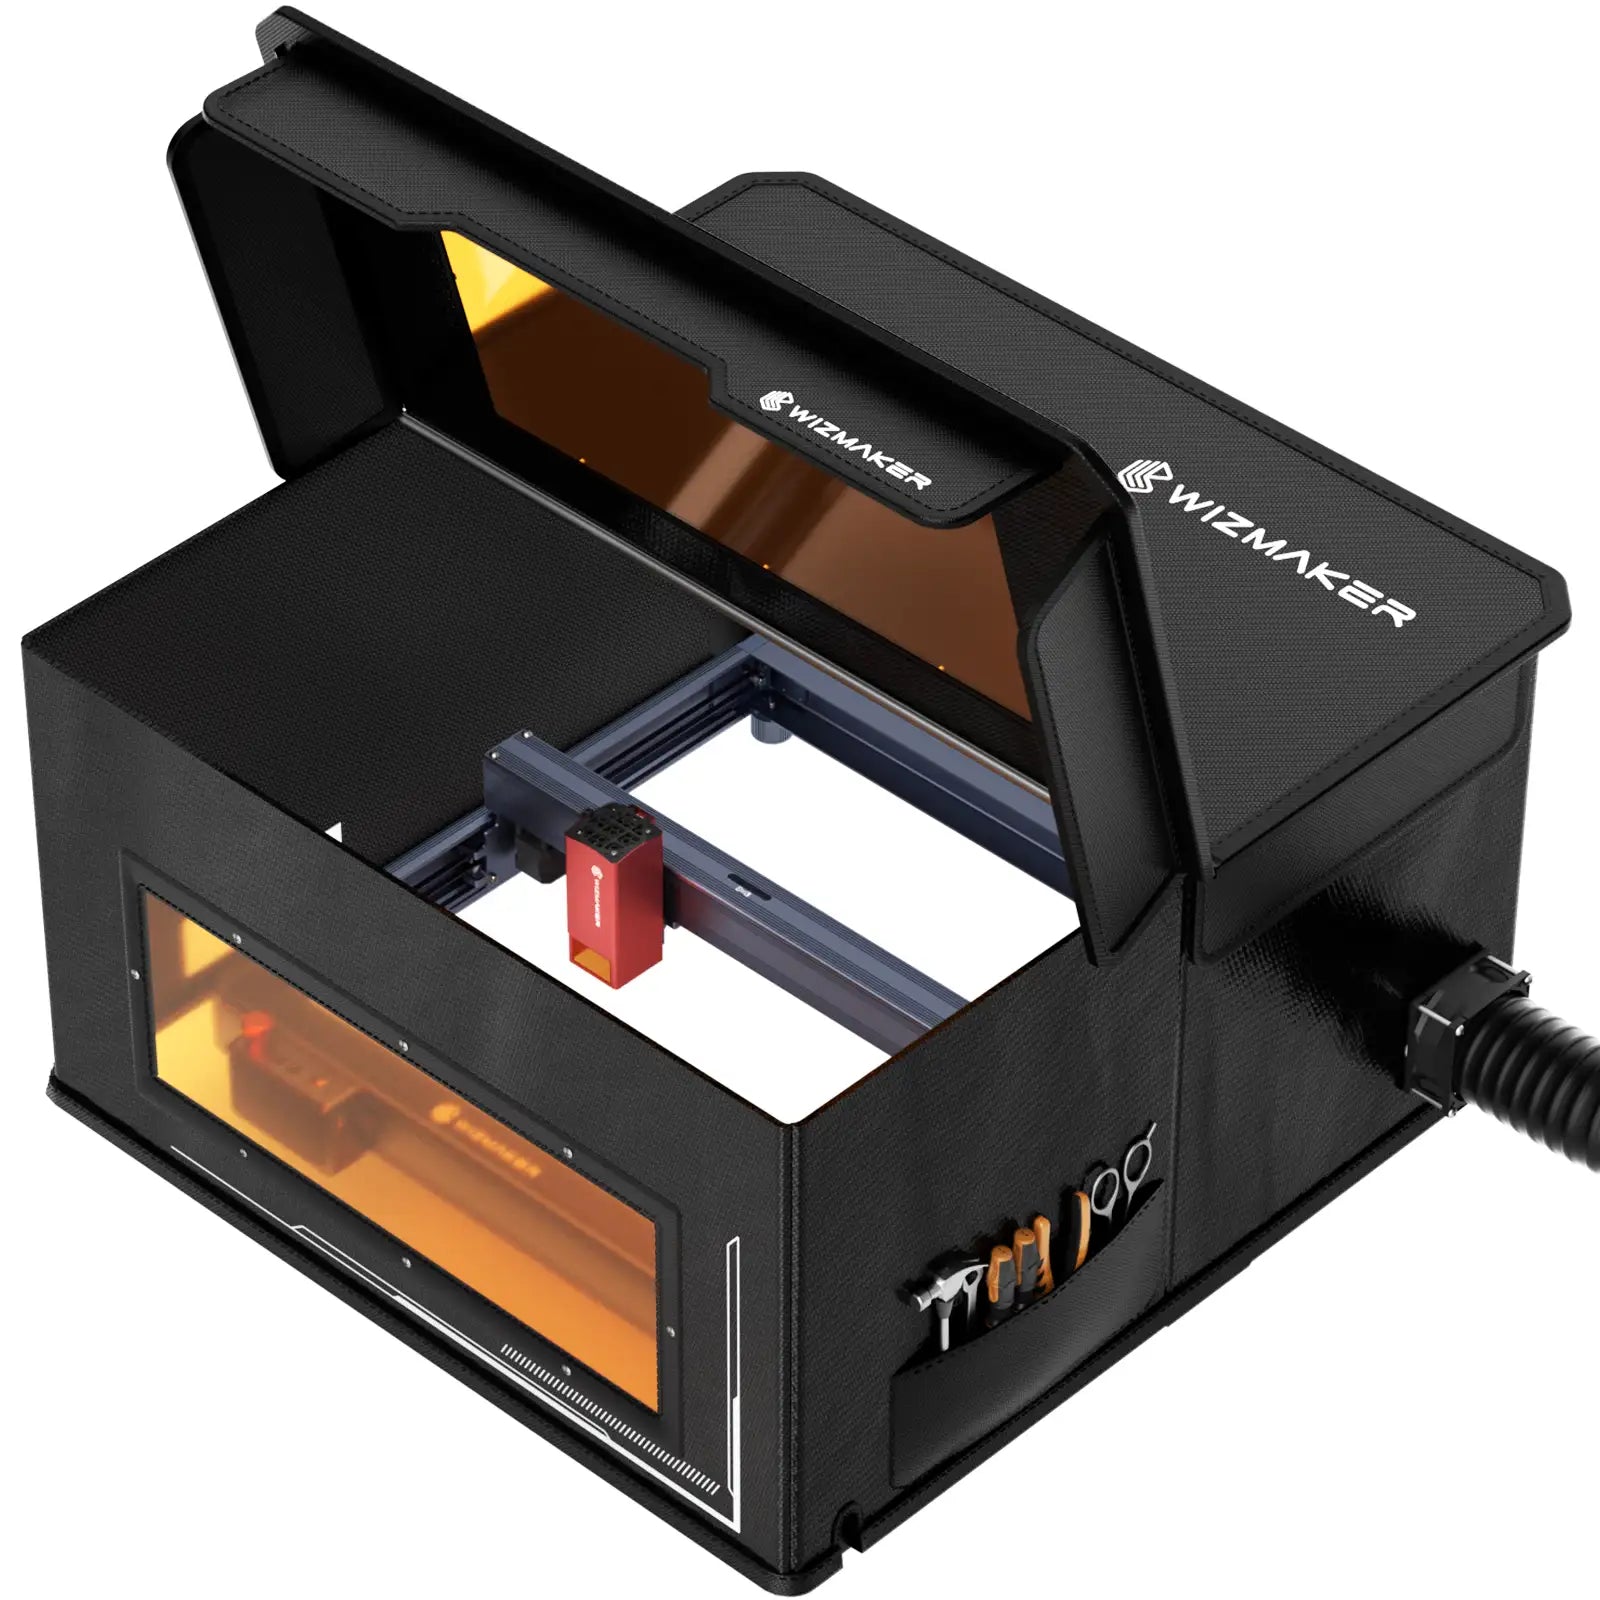 WIZMAKER Enclosure Foldable Dust-Proof Cover for Most Laser Engravers